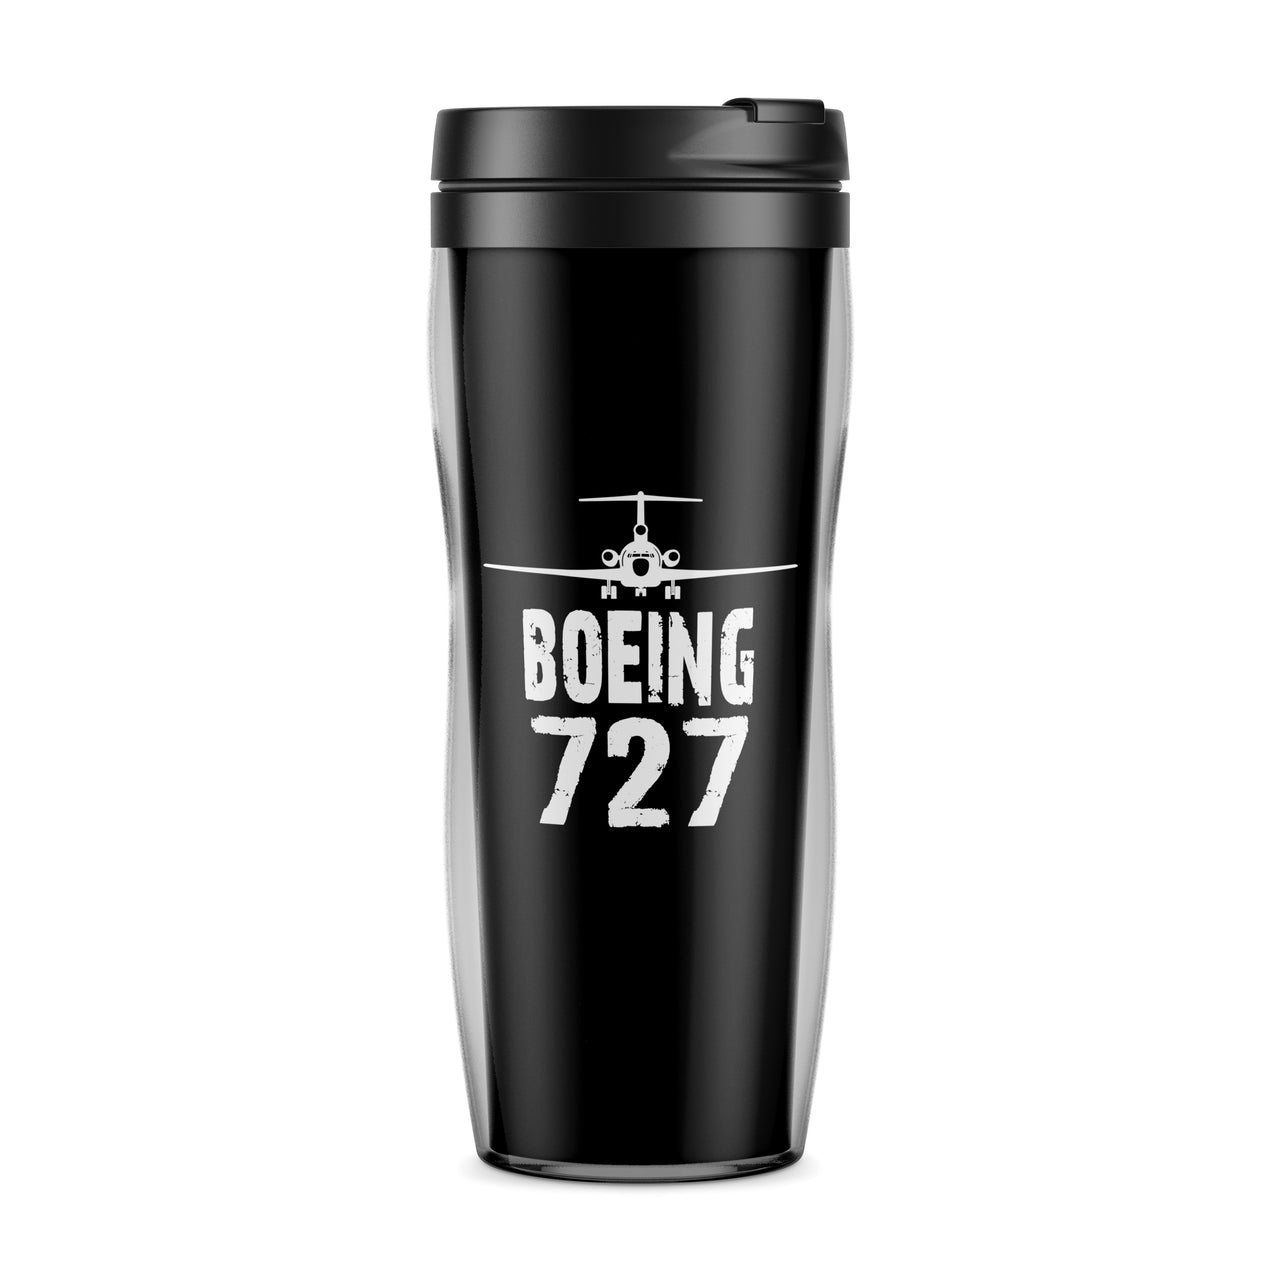 Boeing 727 & Plane Designed Travel Mugs